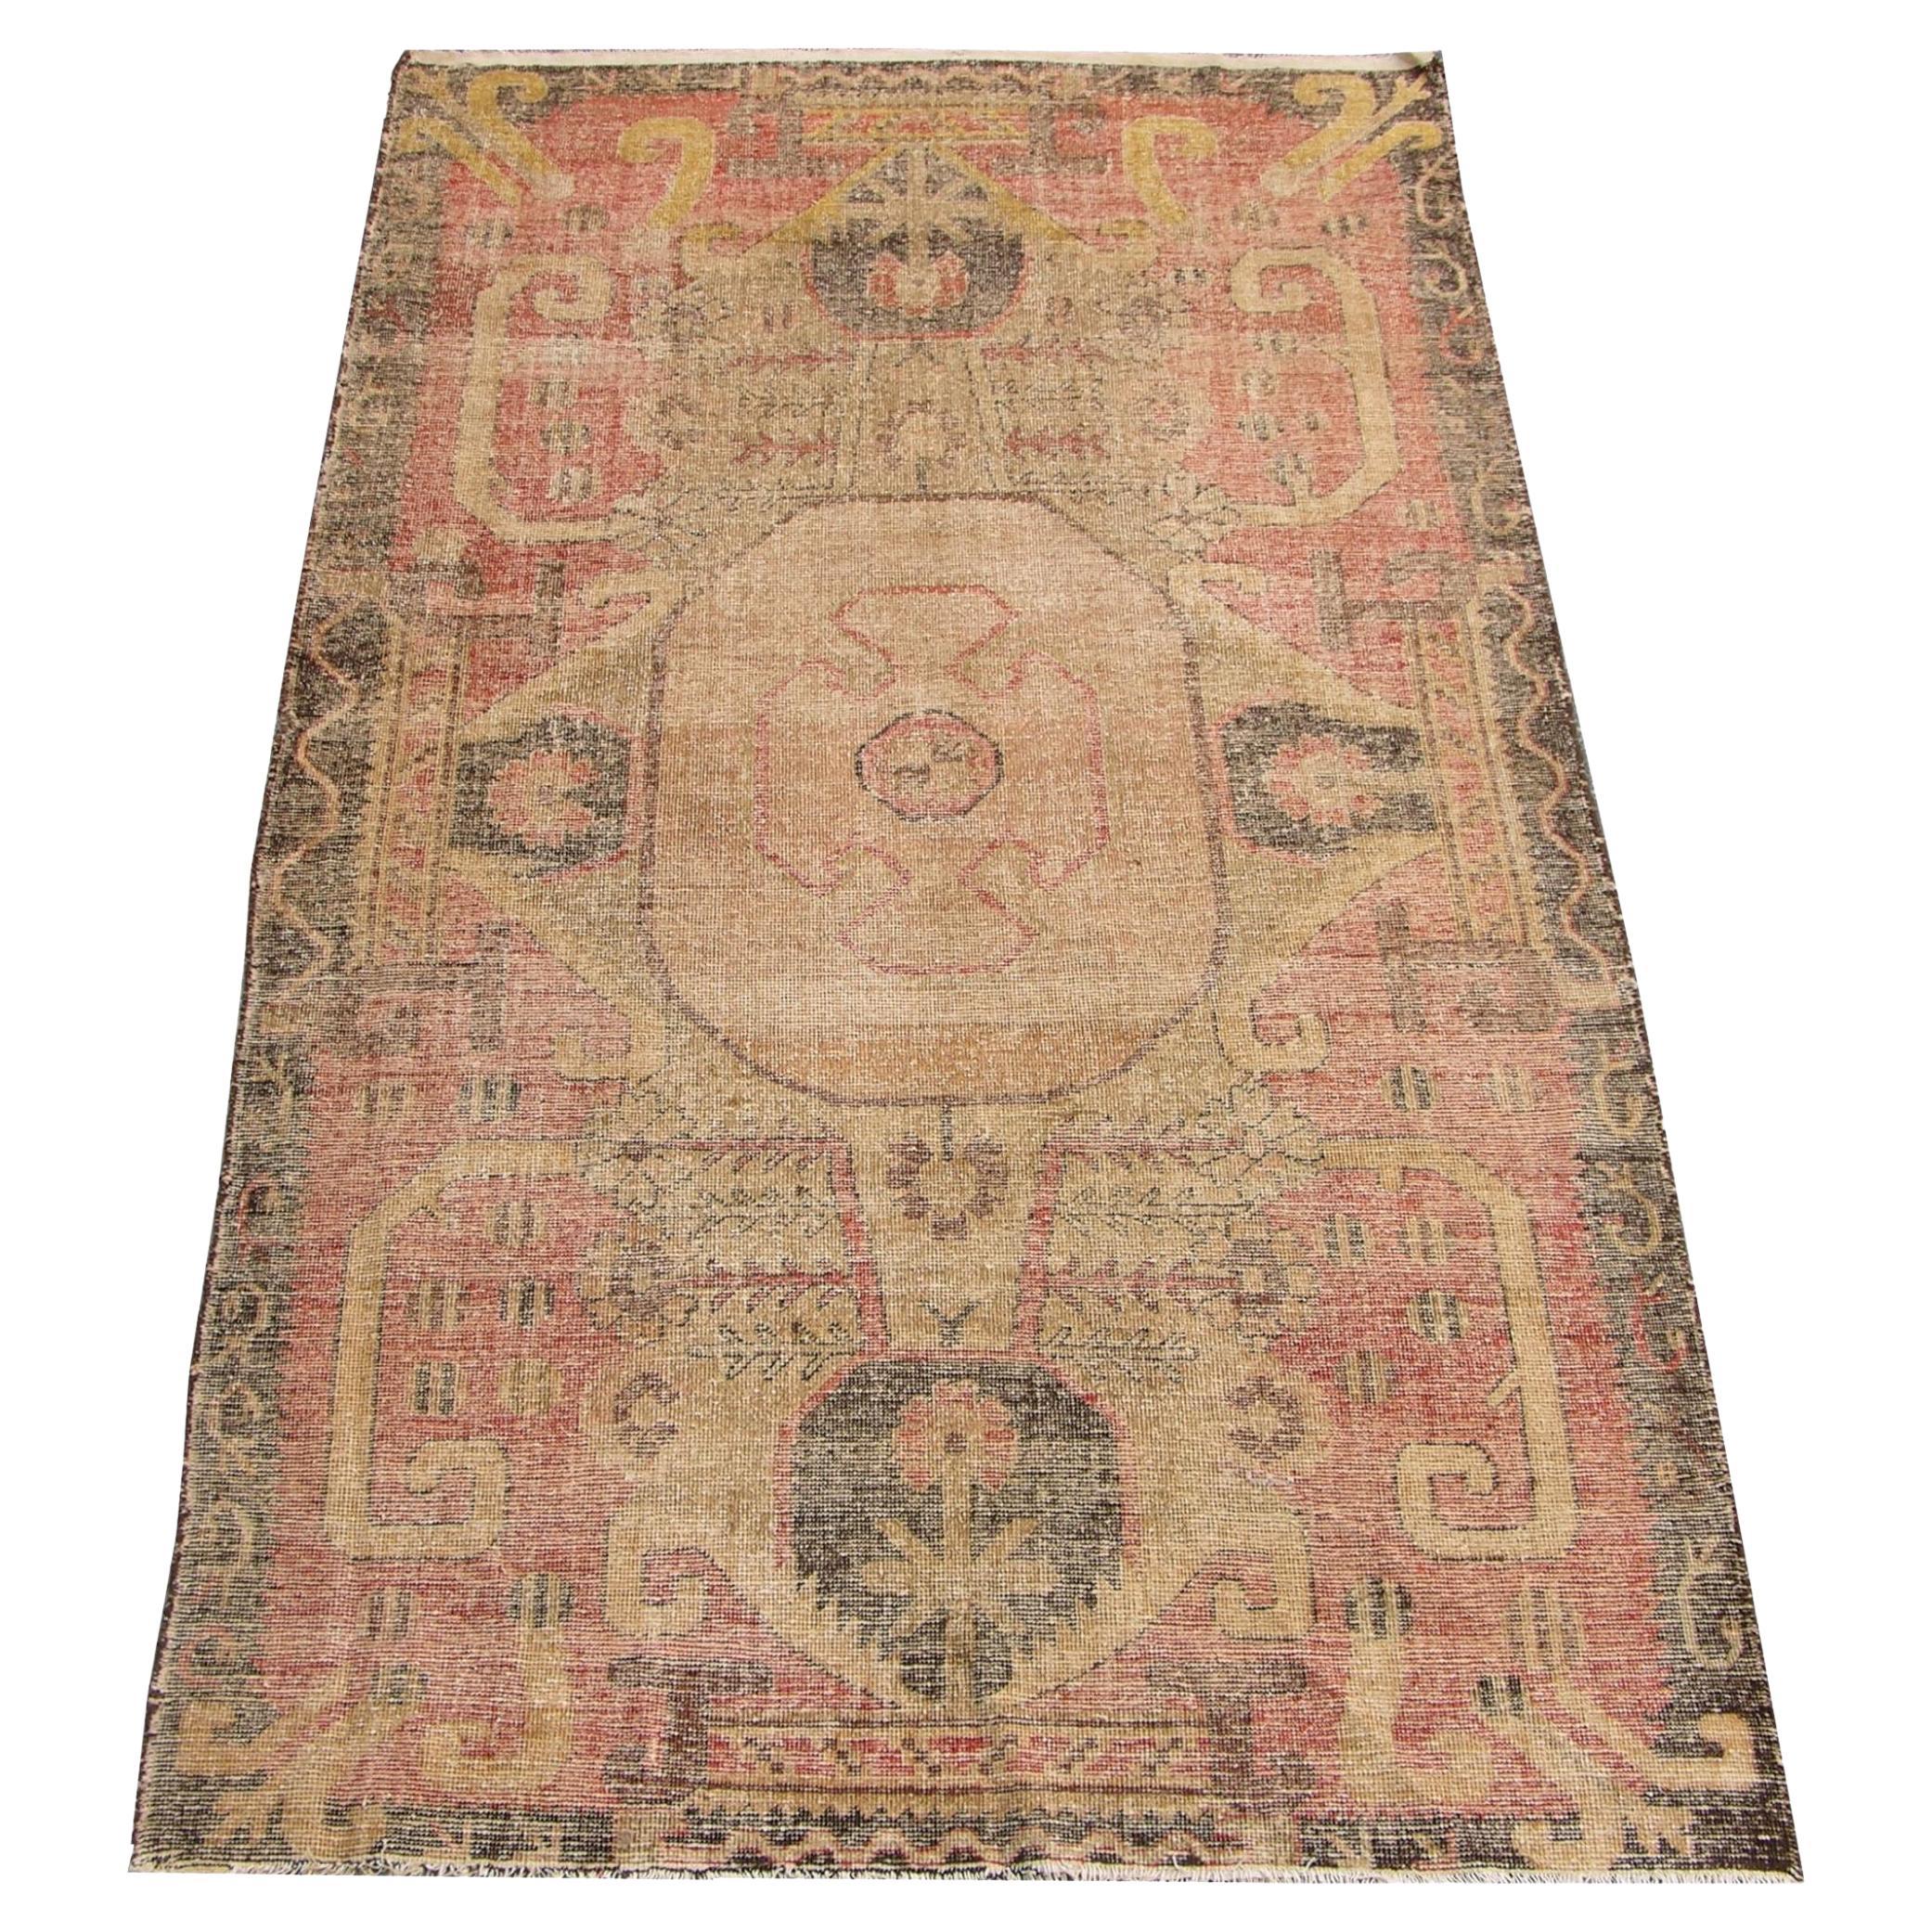 1900 Antiker Khotan-Samarkand-Stammes-Teppich